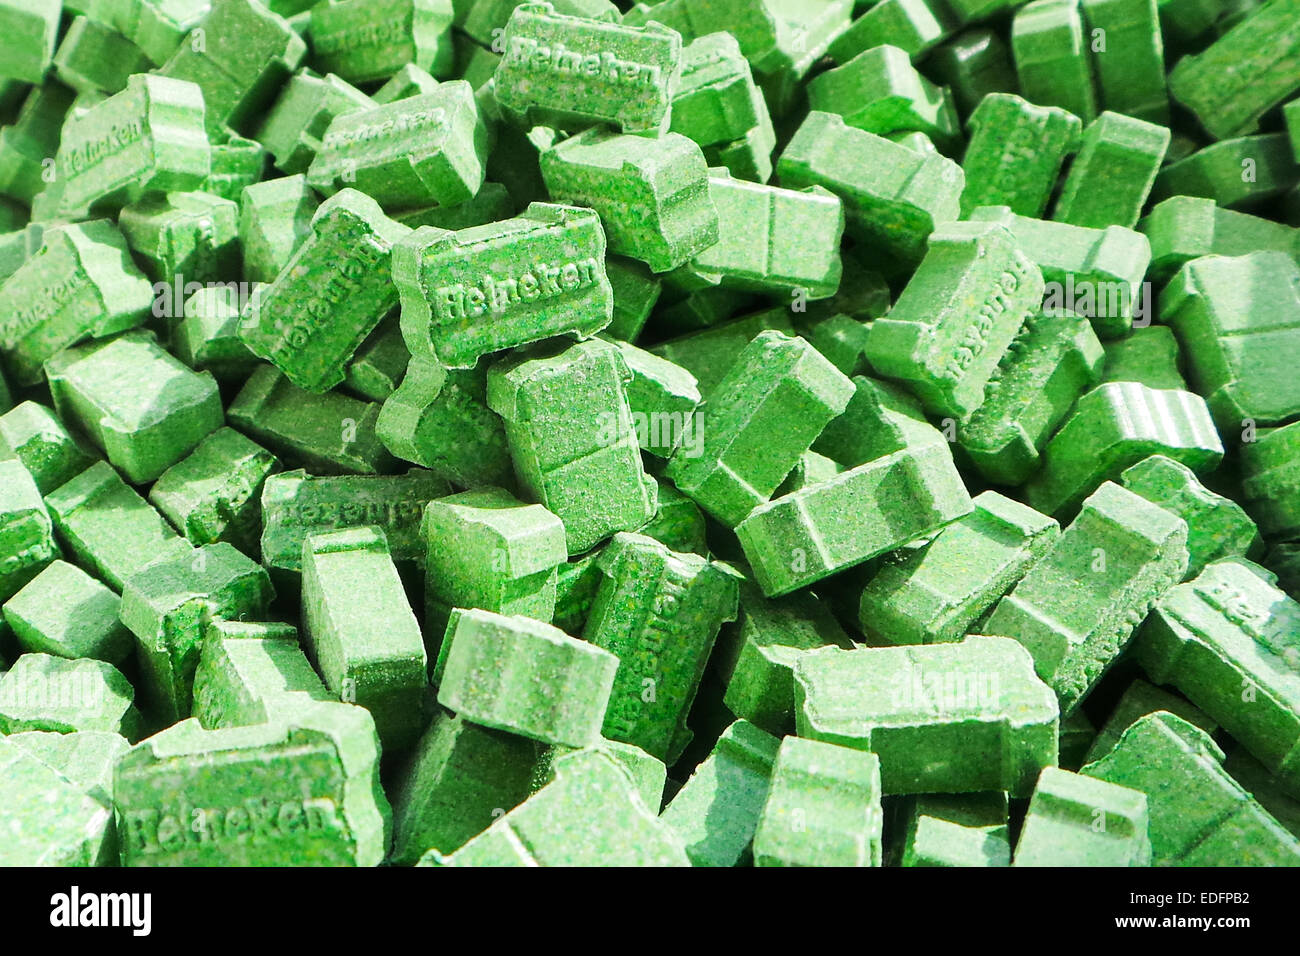 'Green' Heineken pilules d'Ecstasy contenant entre 200-220mg de MDMA (3,4-méthylènedioxy-N-méthylamphétamine). Banque D'Images